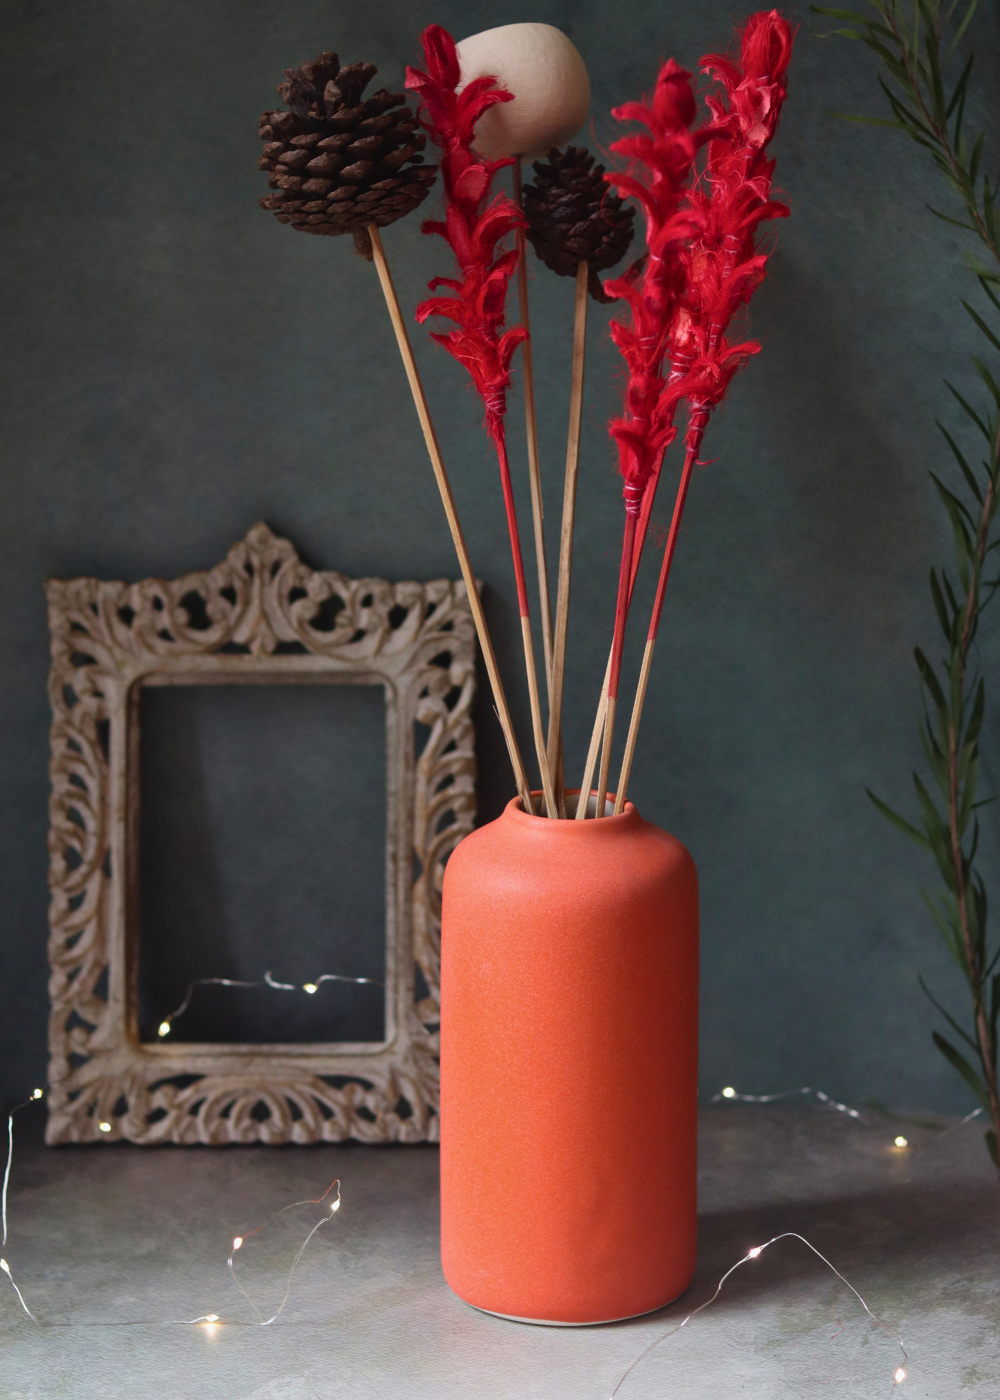 Orange bloom ceramic flower vase with flowers